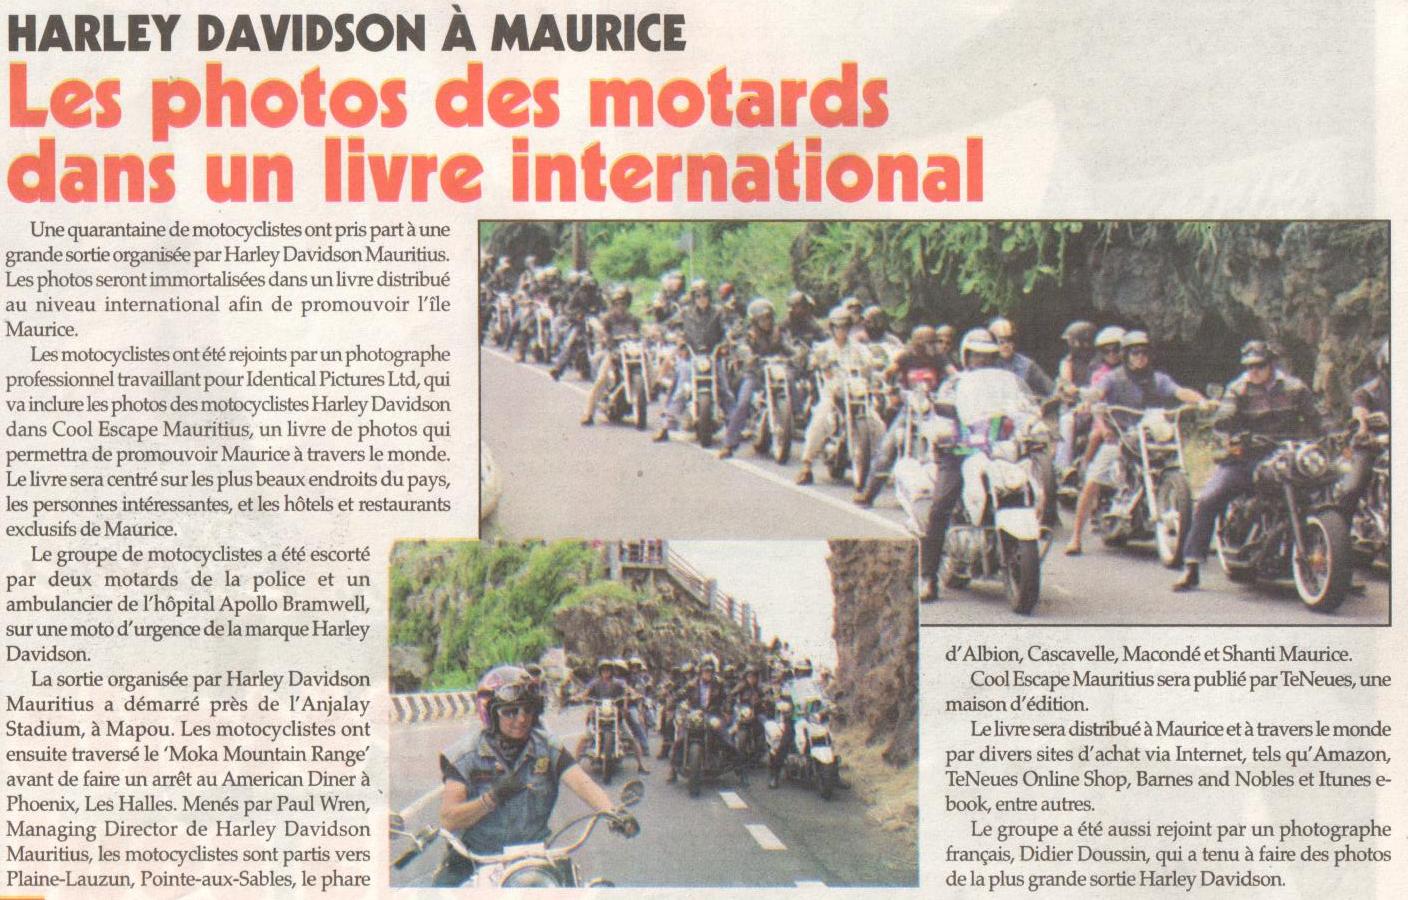 Le Defi Quotidien 8.04.14 Harley Davidson Identical Pictures